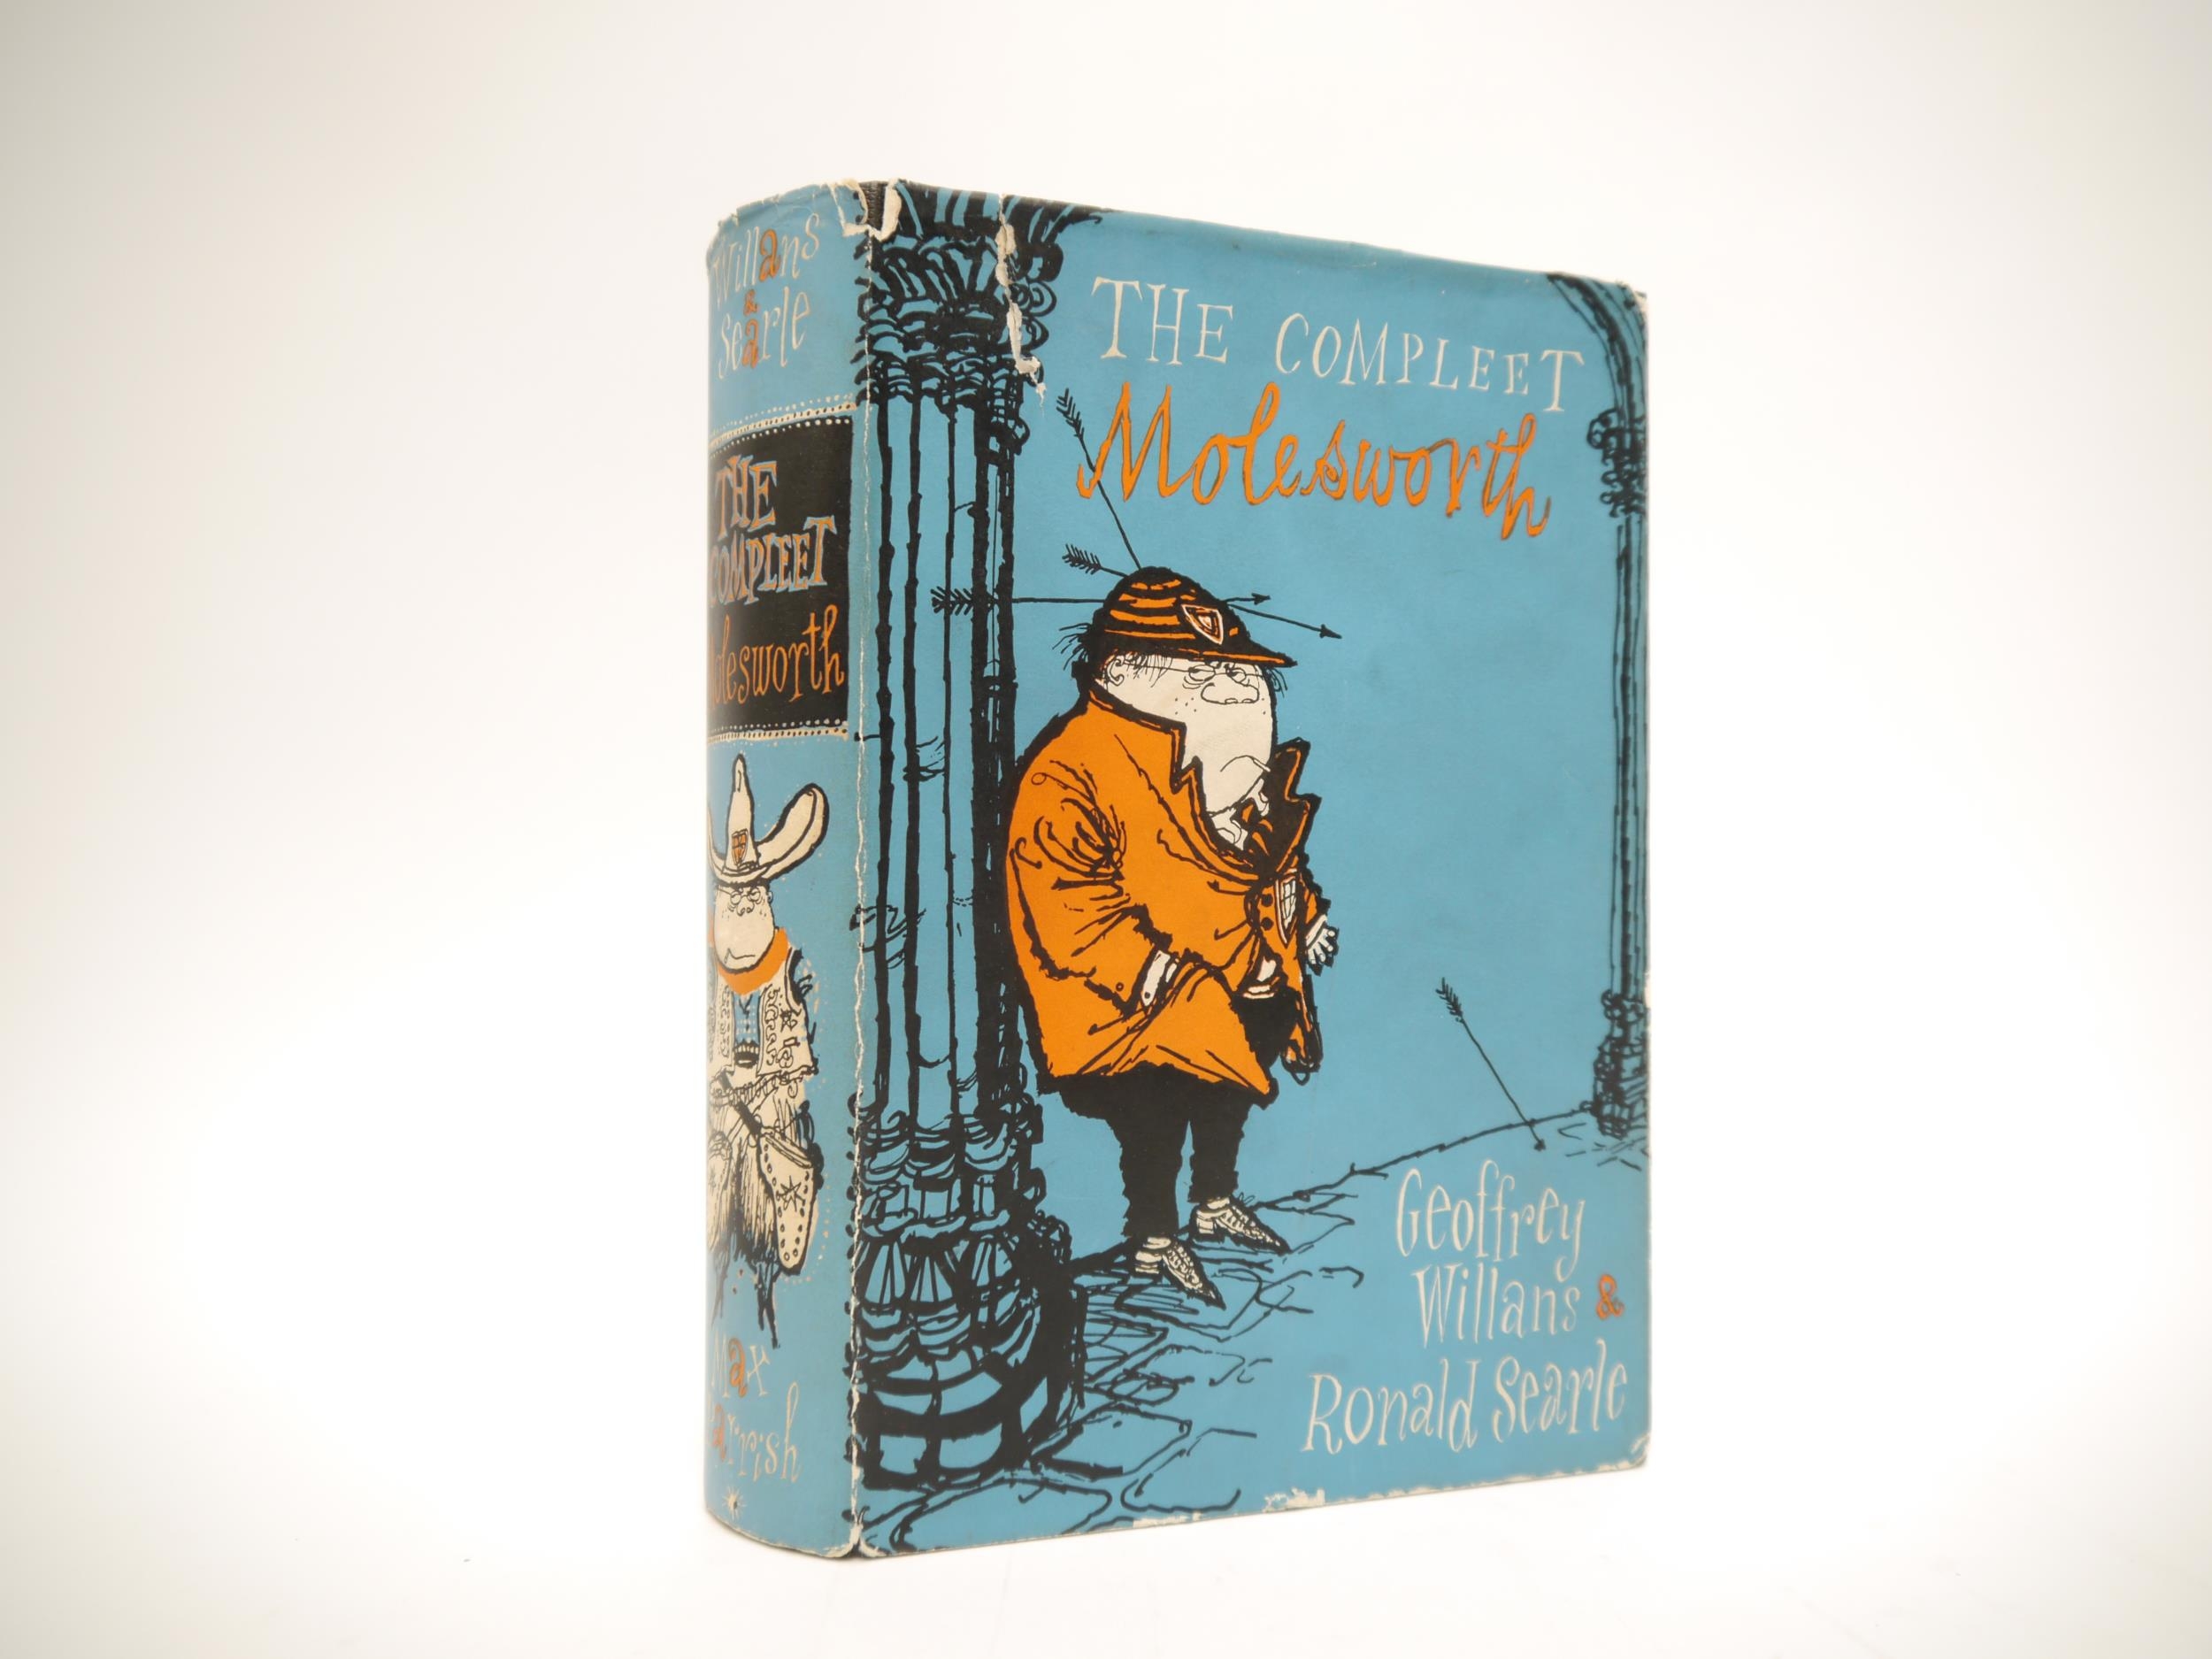 Ronald Searle (illustrated); Geoffrey Willans: 'The Compleet Molesworth', London, Max Parrish, 1958,